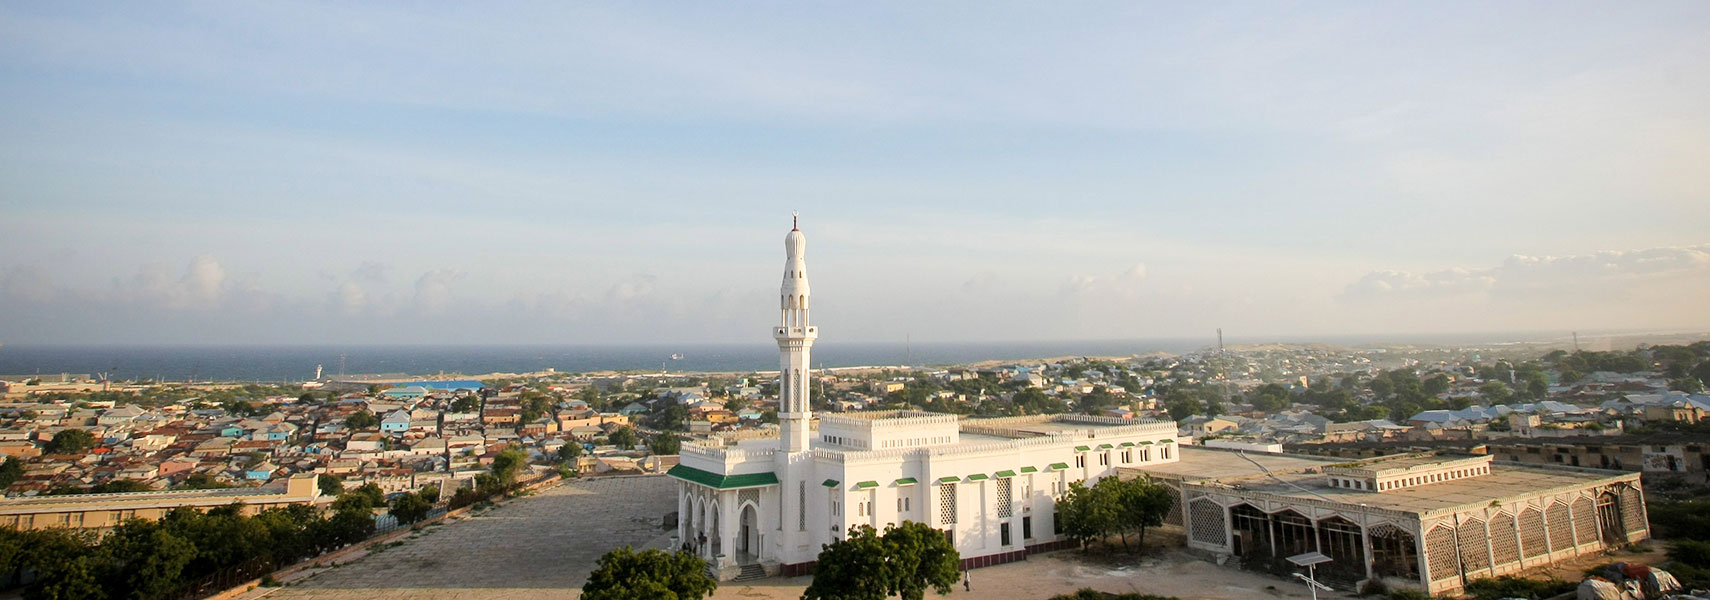 Mosque opposite the parliament building in Mogadishu